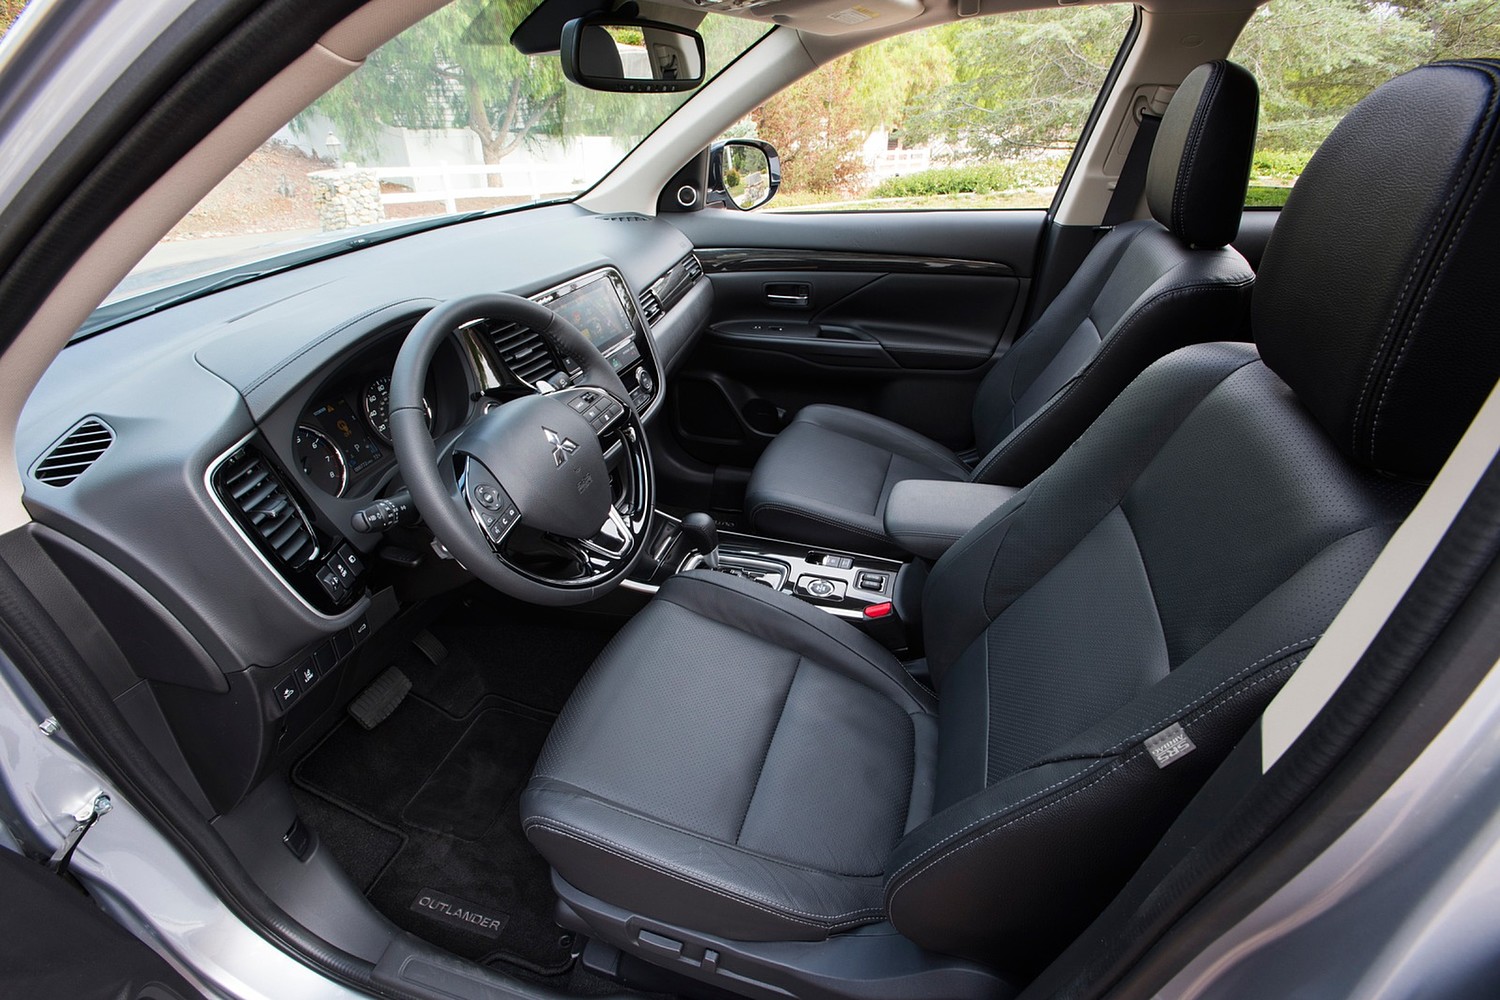 2017 Mitsubishi Outlander GT 4dr SUV Interior Shown